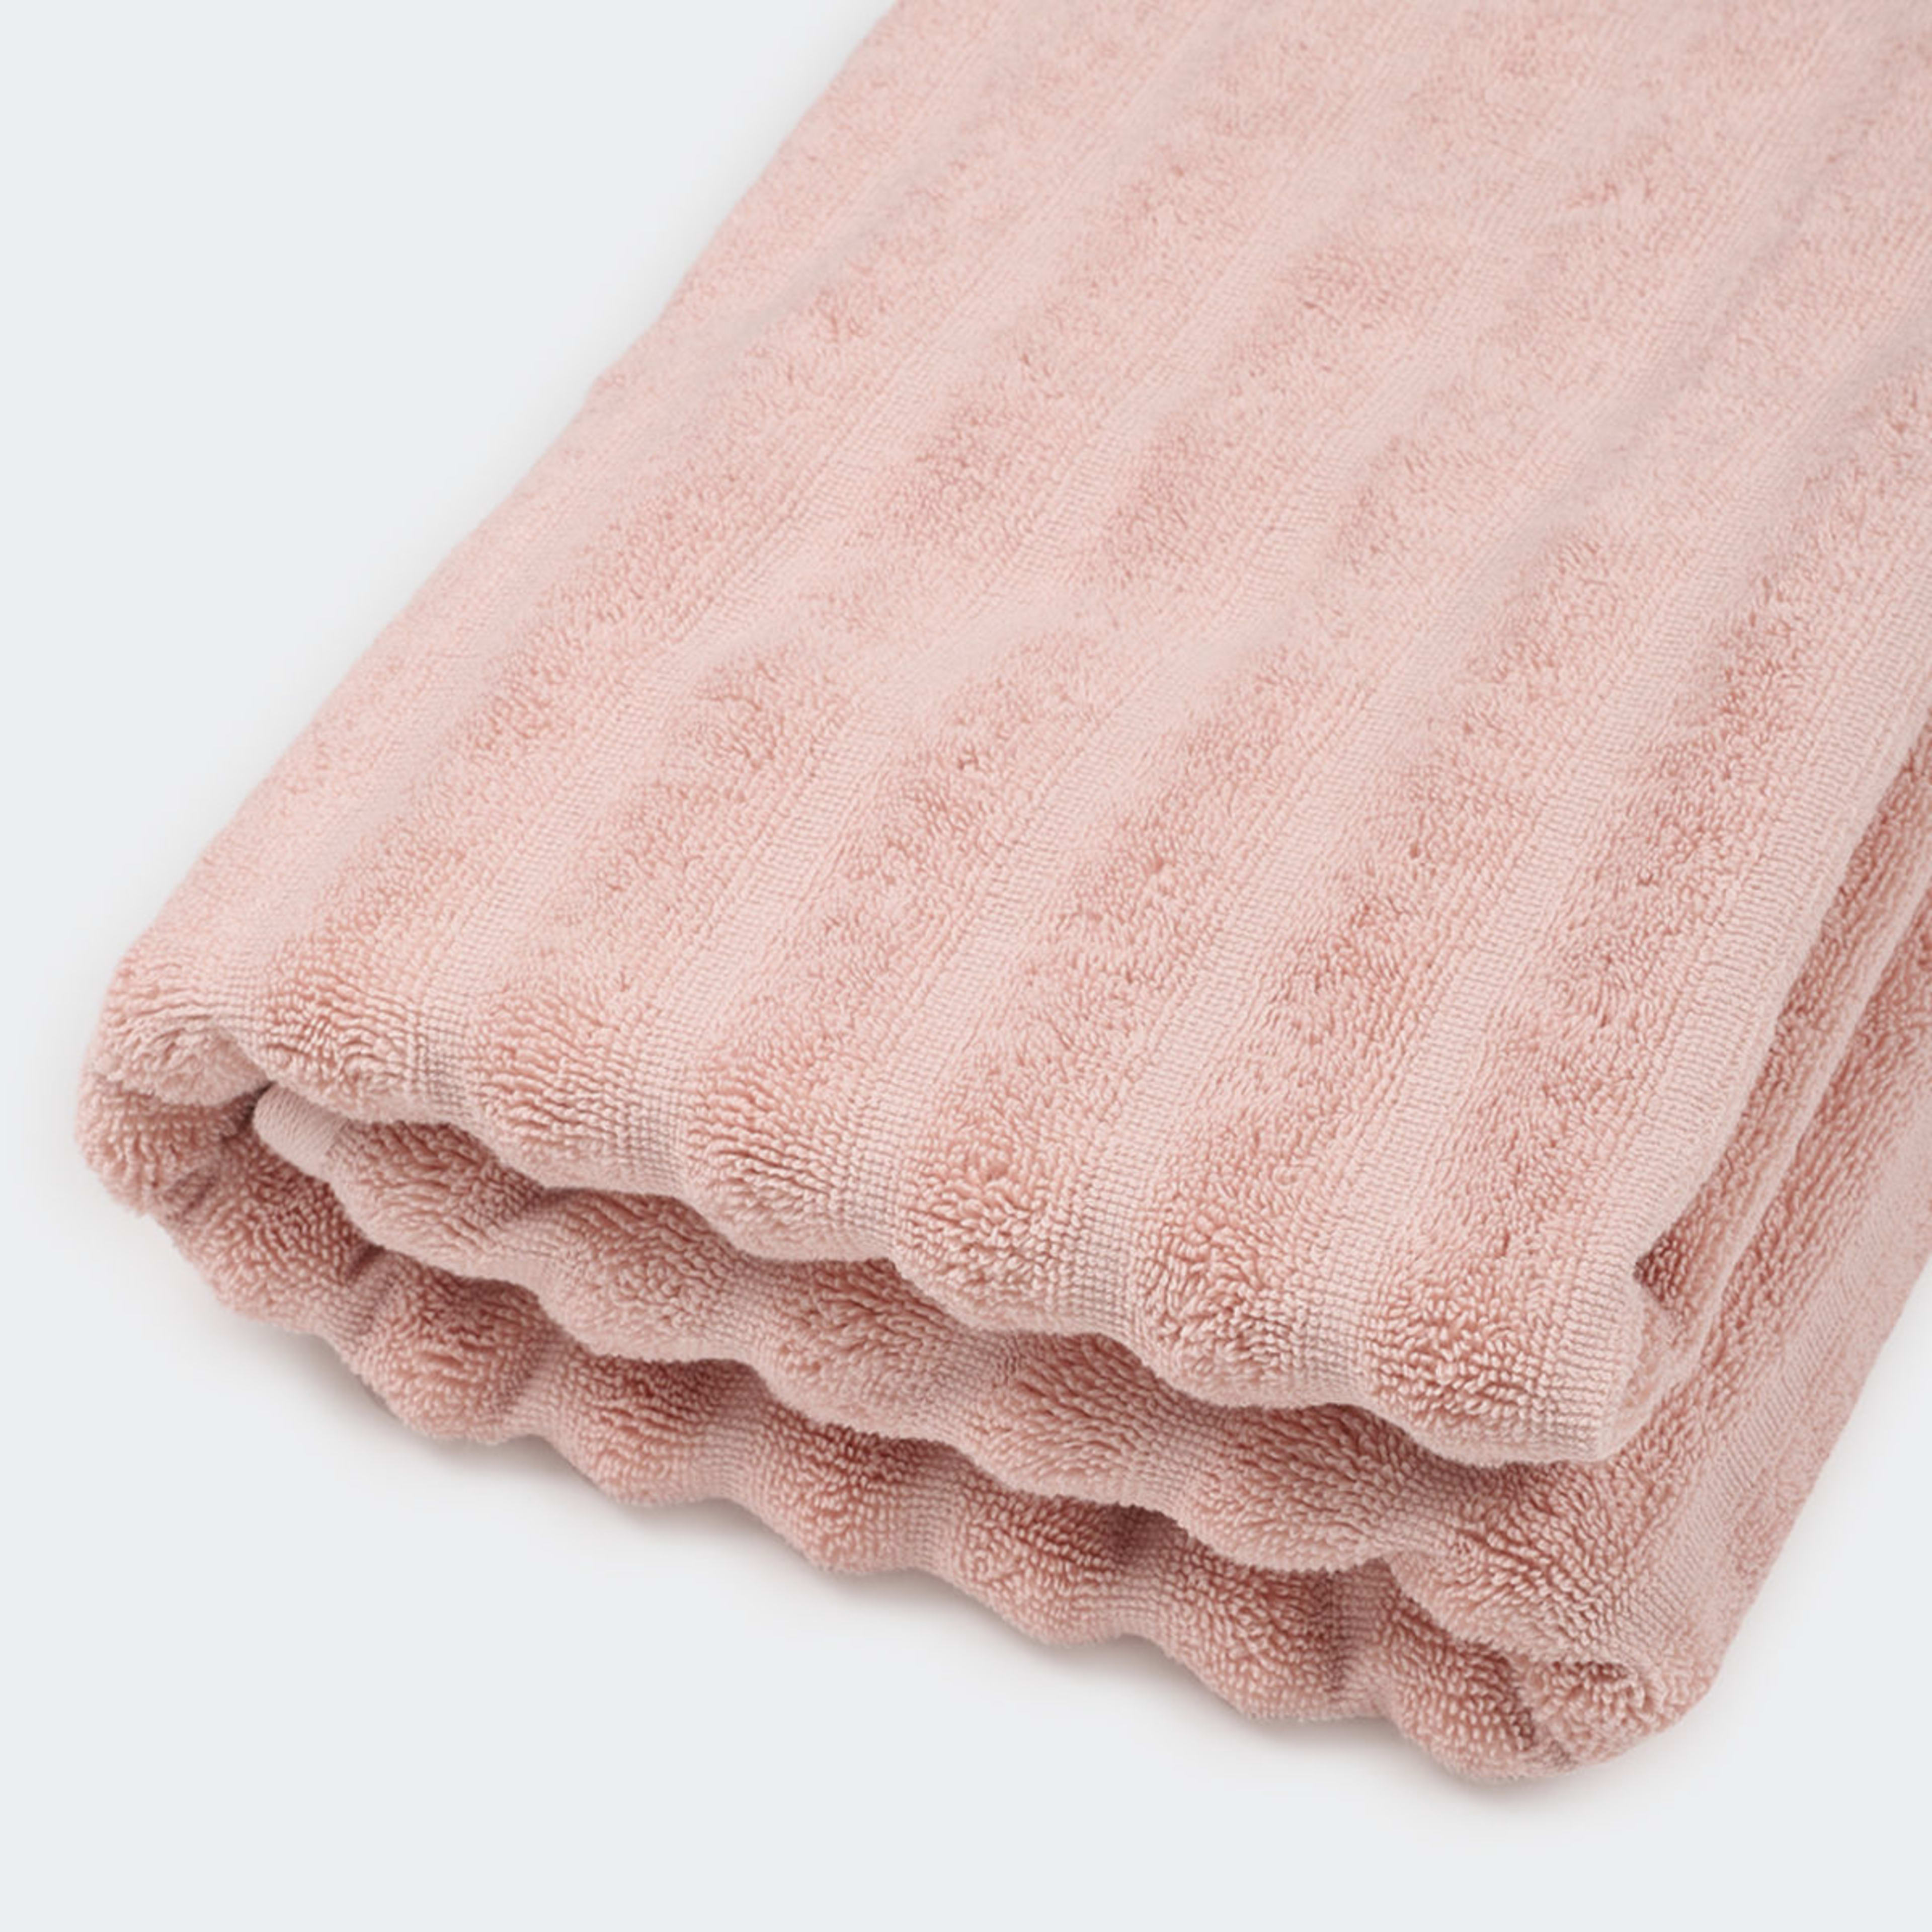 Thick Ribbed Australian Cotton Bath Sheet - Pink - Kmart